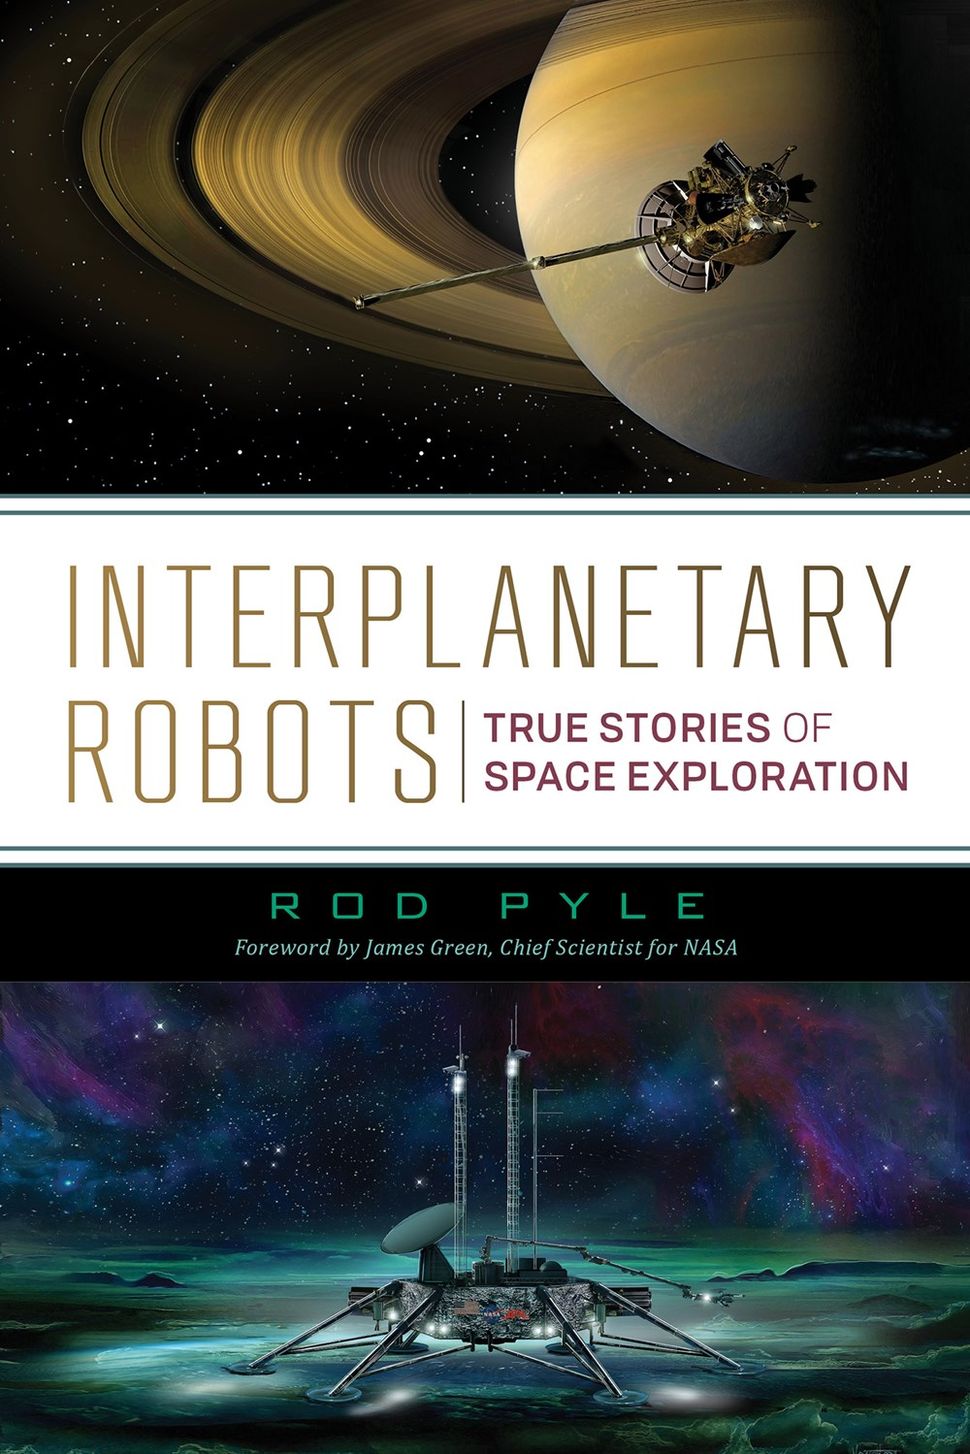 Barnstorming Venus: Excerpt from Rod Pyle's 'Interplanetary Robots'